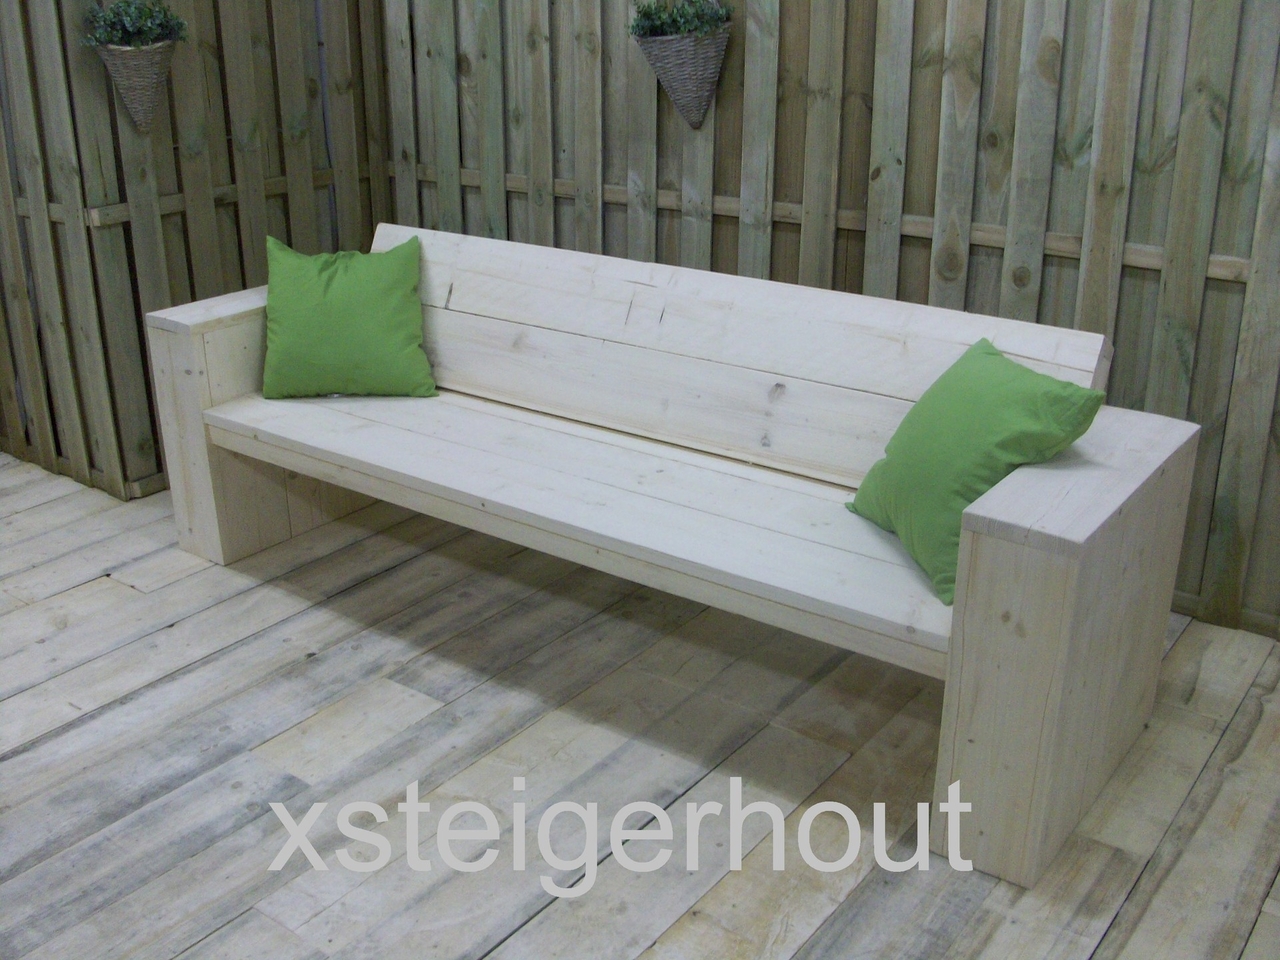 interferentie Geweldig Vergoeding Loungebank steigerhout bouwpakket v.a. € 125,- xsteigerhout.nl -  xsteigerhout